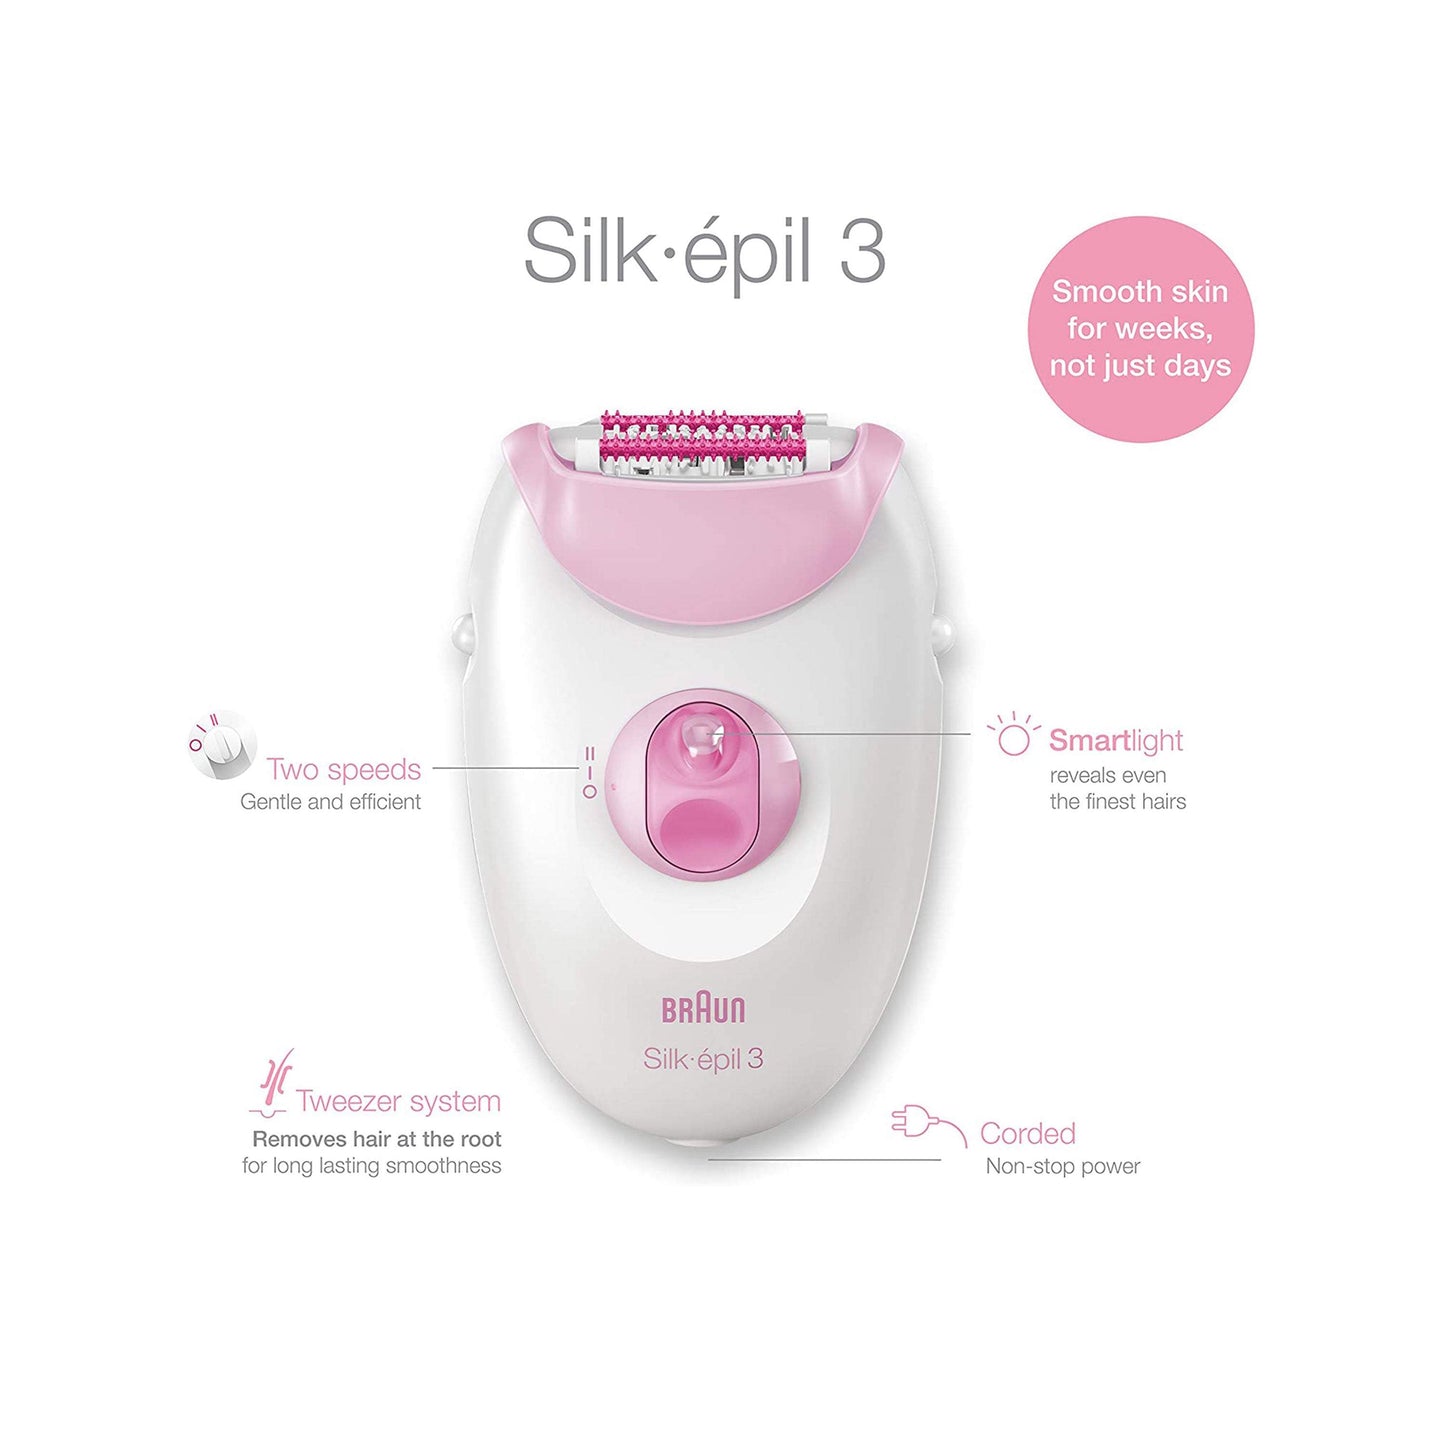 Braun Silk-épil 3 epilator with 2 extras incl. shaver head.-Royal Brands Co-